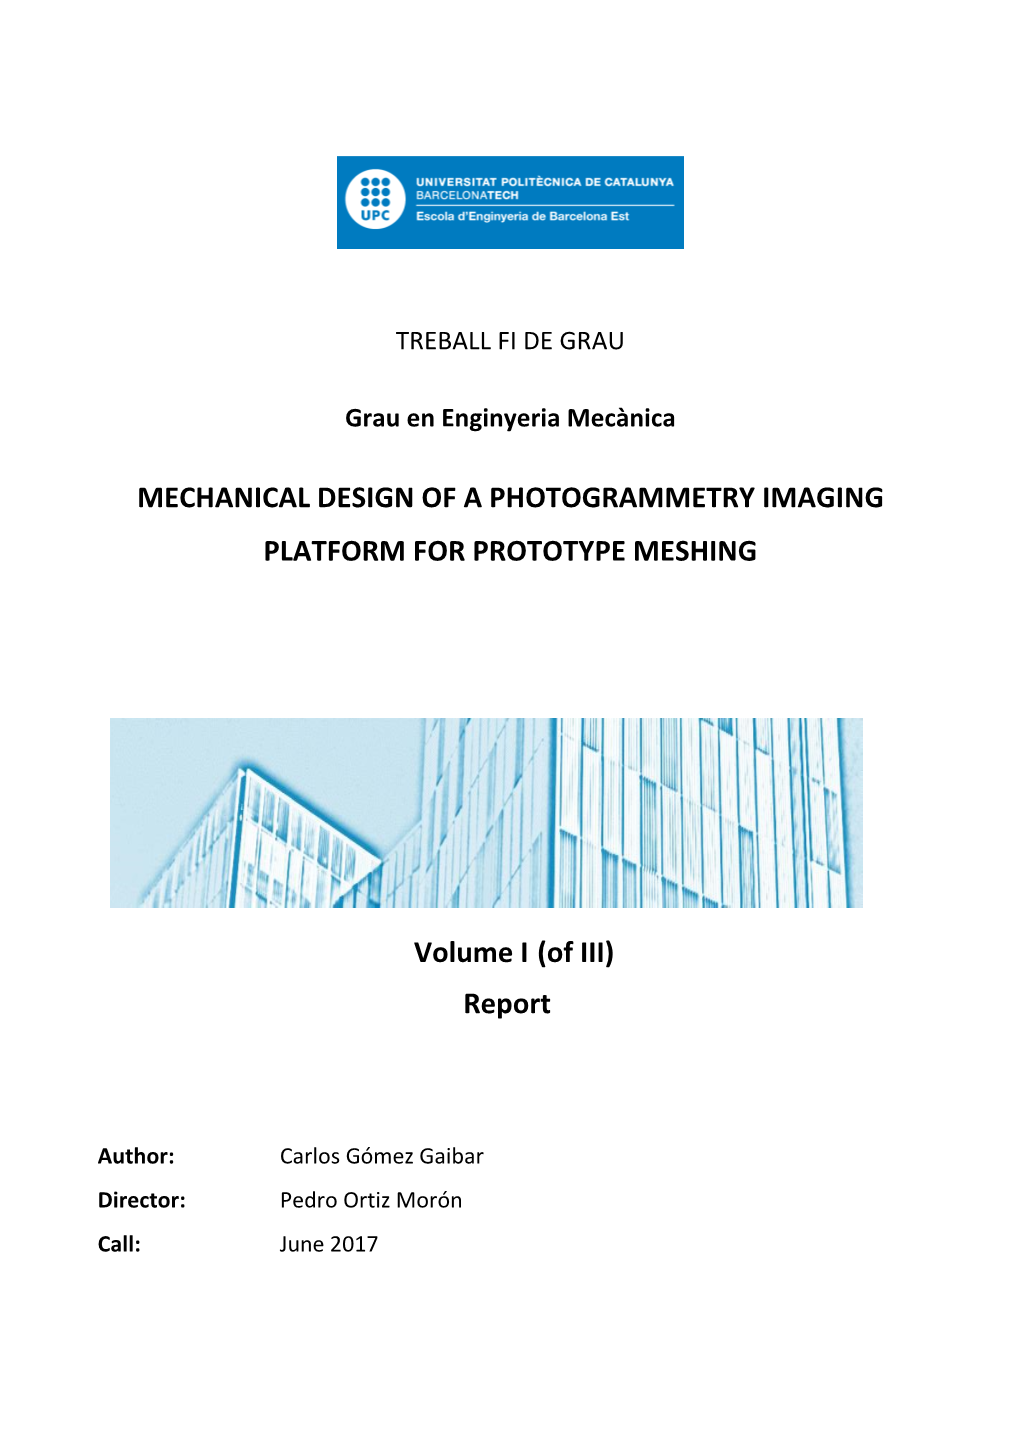 Mechanical Design of a Photogrammetry Imaging Platform for Prototype Meshing